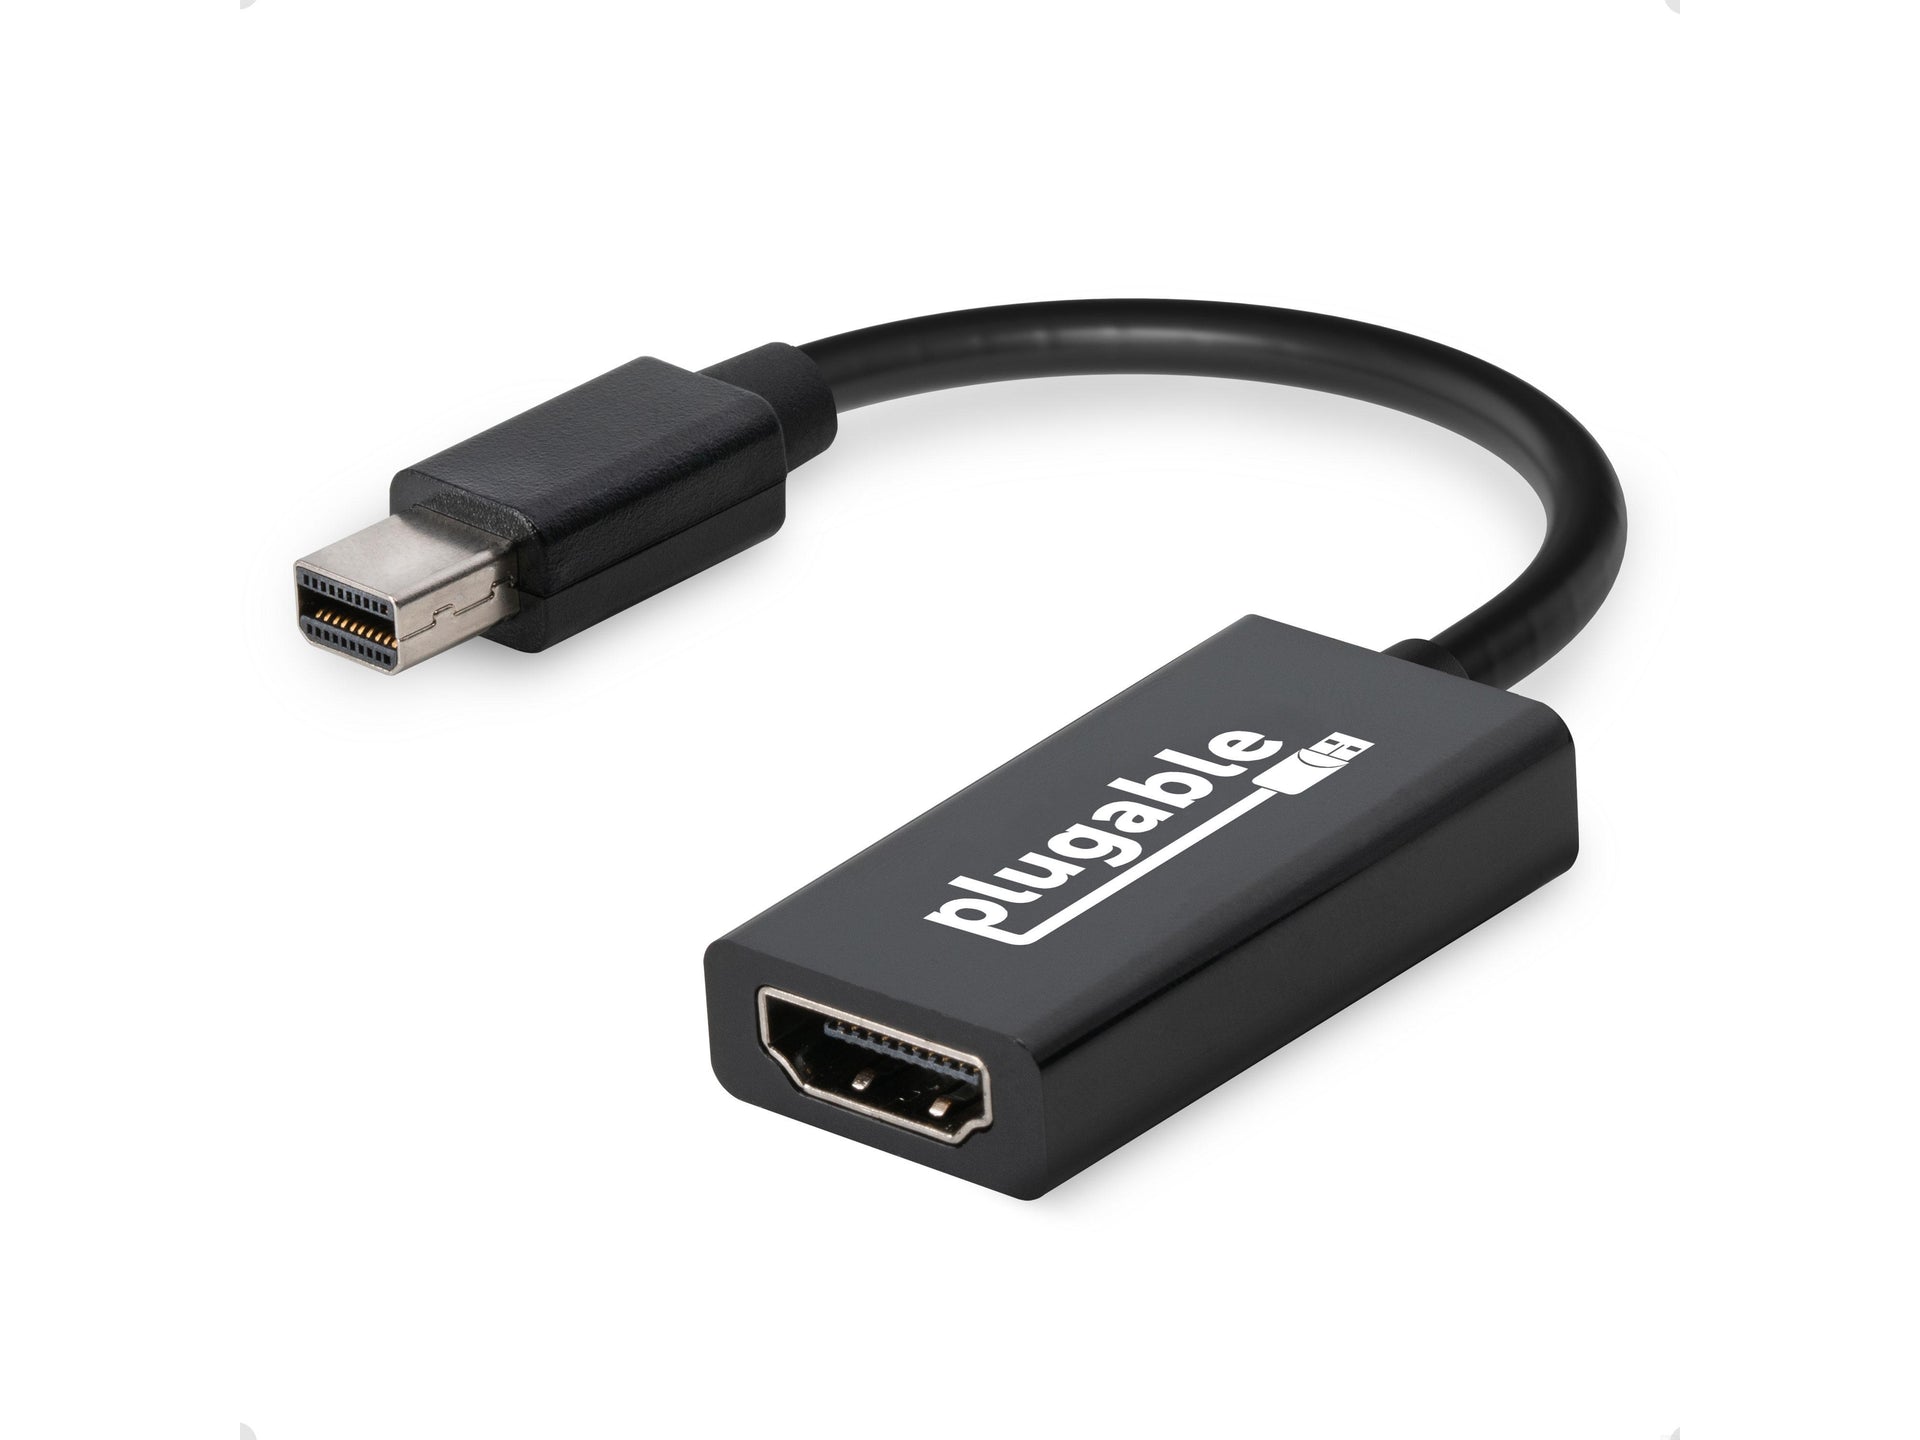 Høring Suradam kalorie Plugable Mini DisplayPort/Thunderbolt™ 2 to HDMI 2.0 Active Adapter –  Plugable Technologies